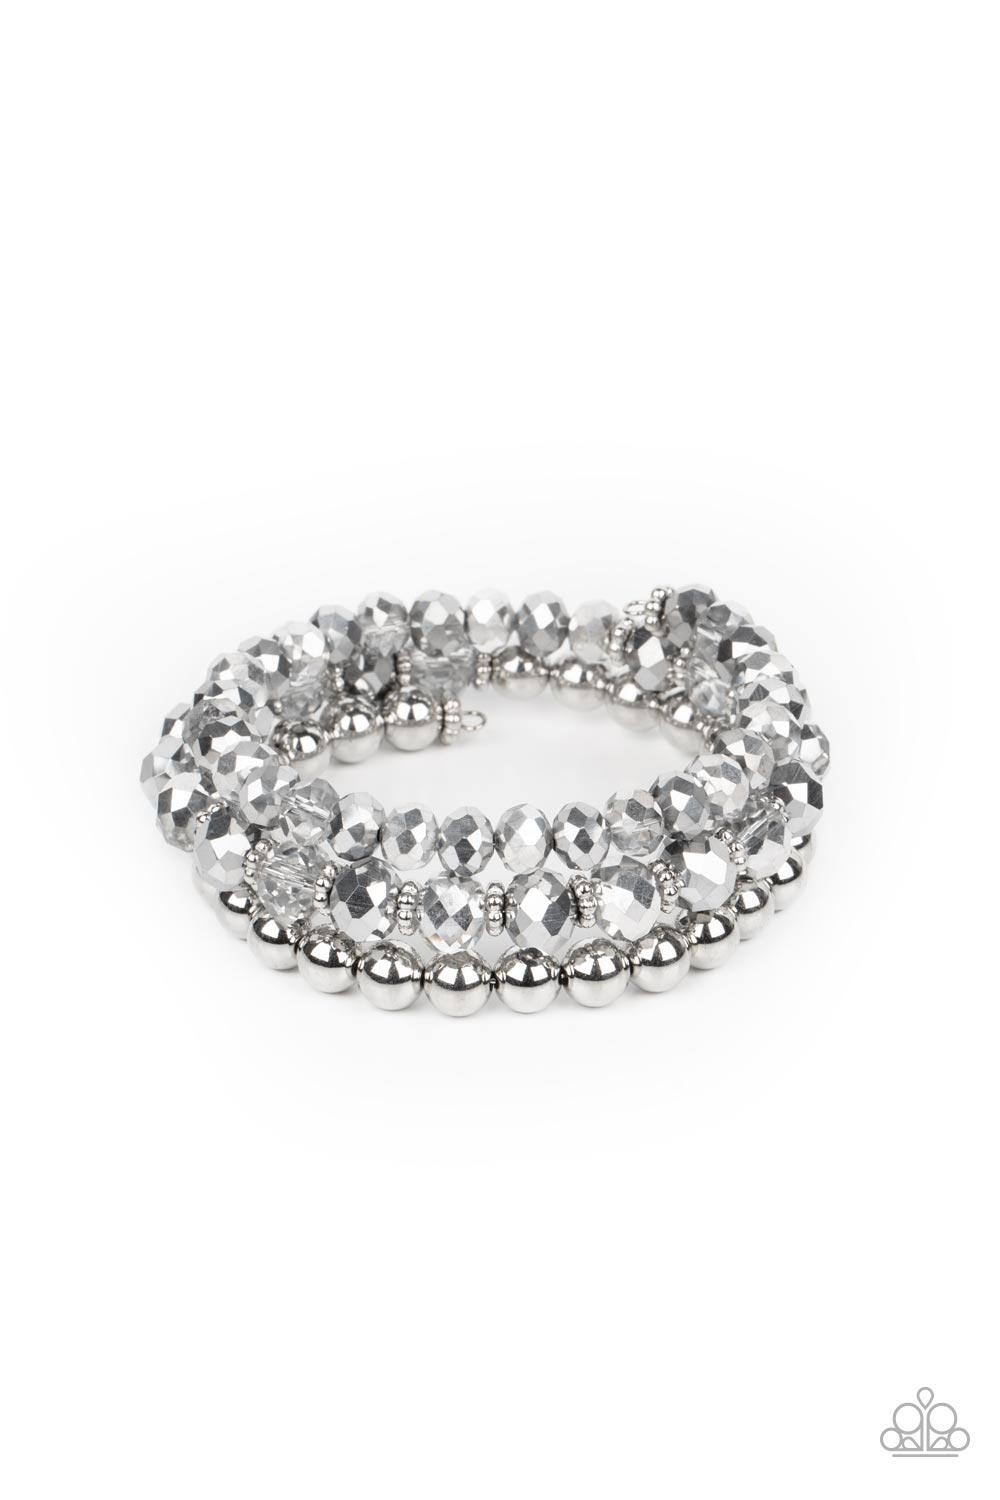 Paparazzi Gimme Gimme Silver Rhinestone Bracelet - A Finishing Touch Jewelry